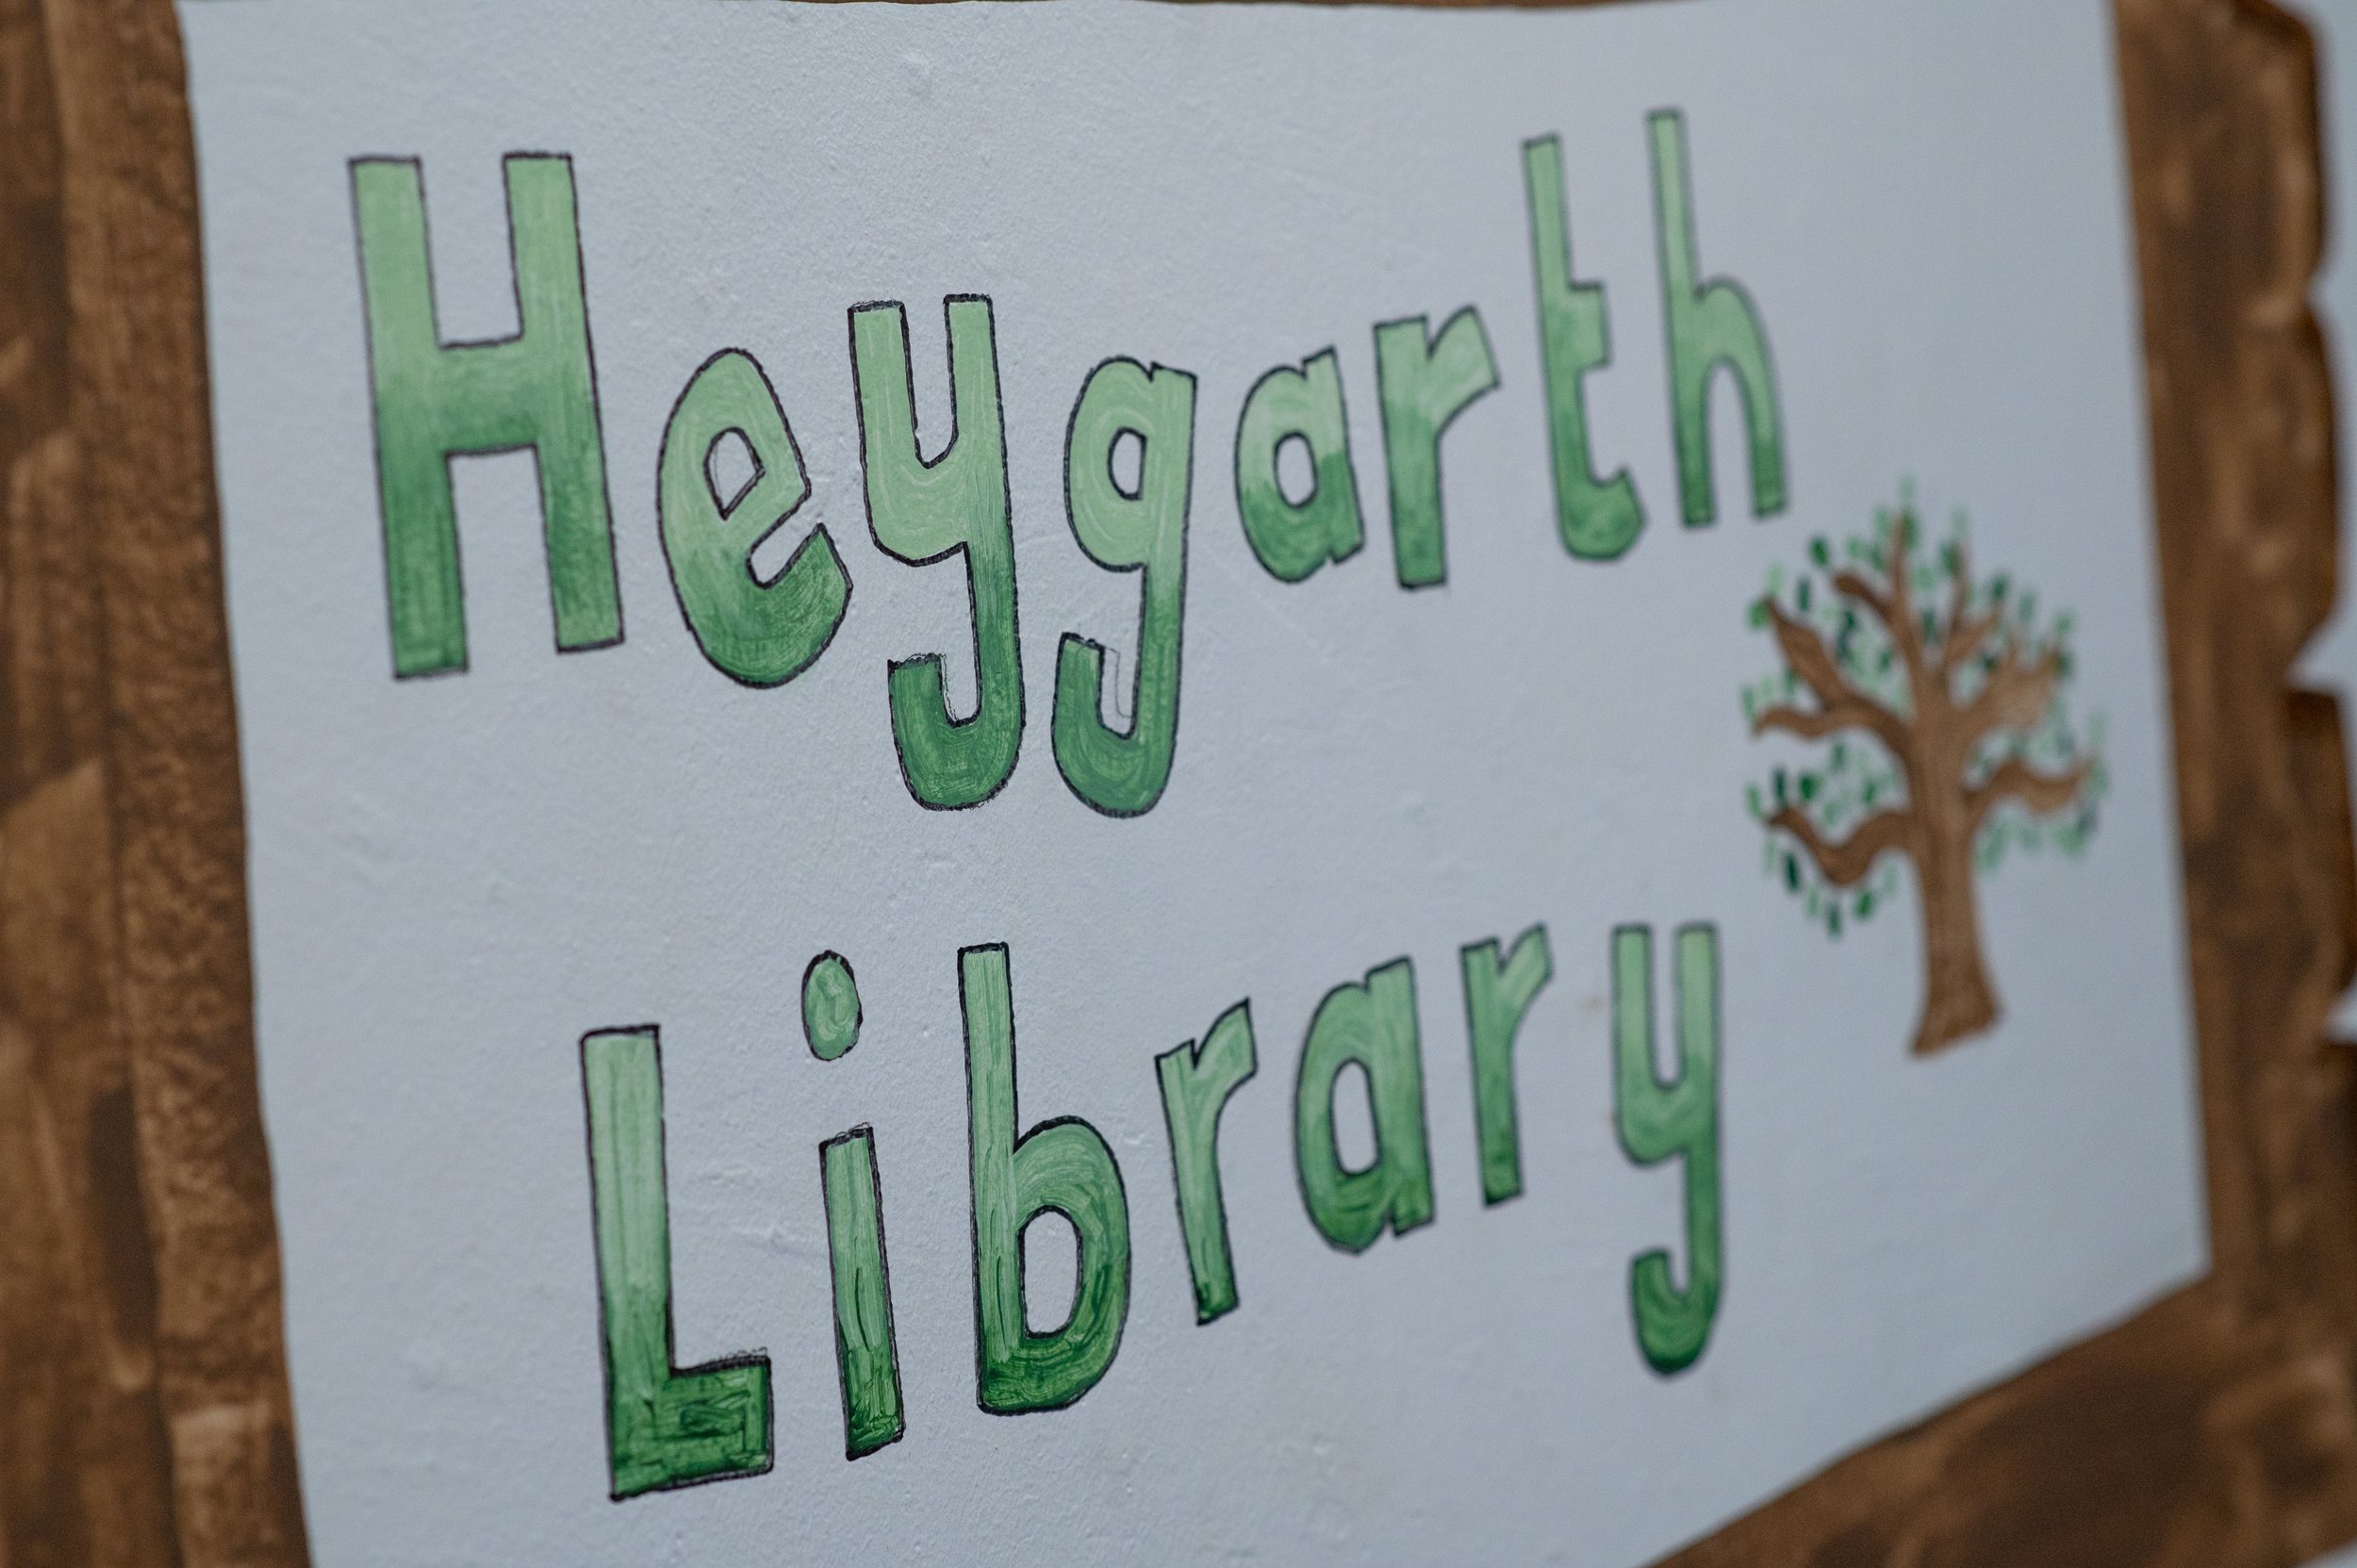 Heygarth-082.jpg